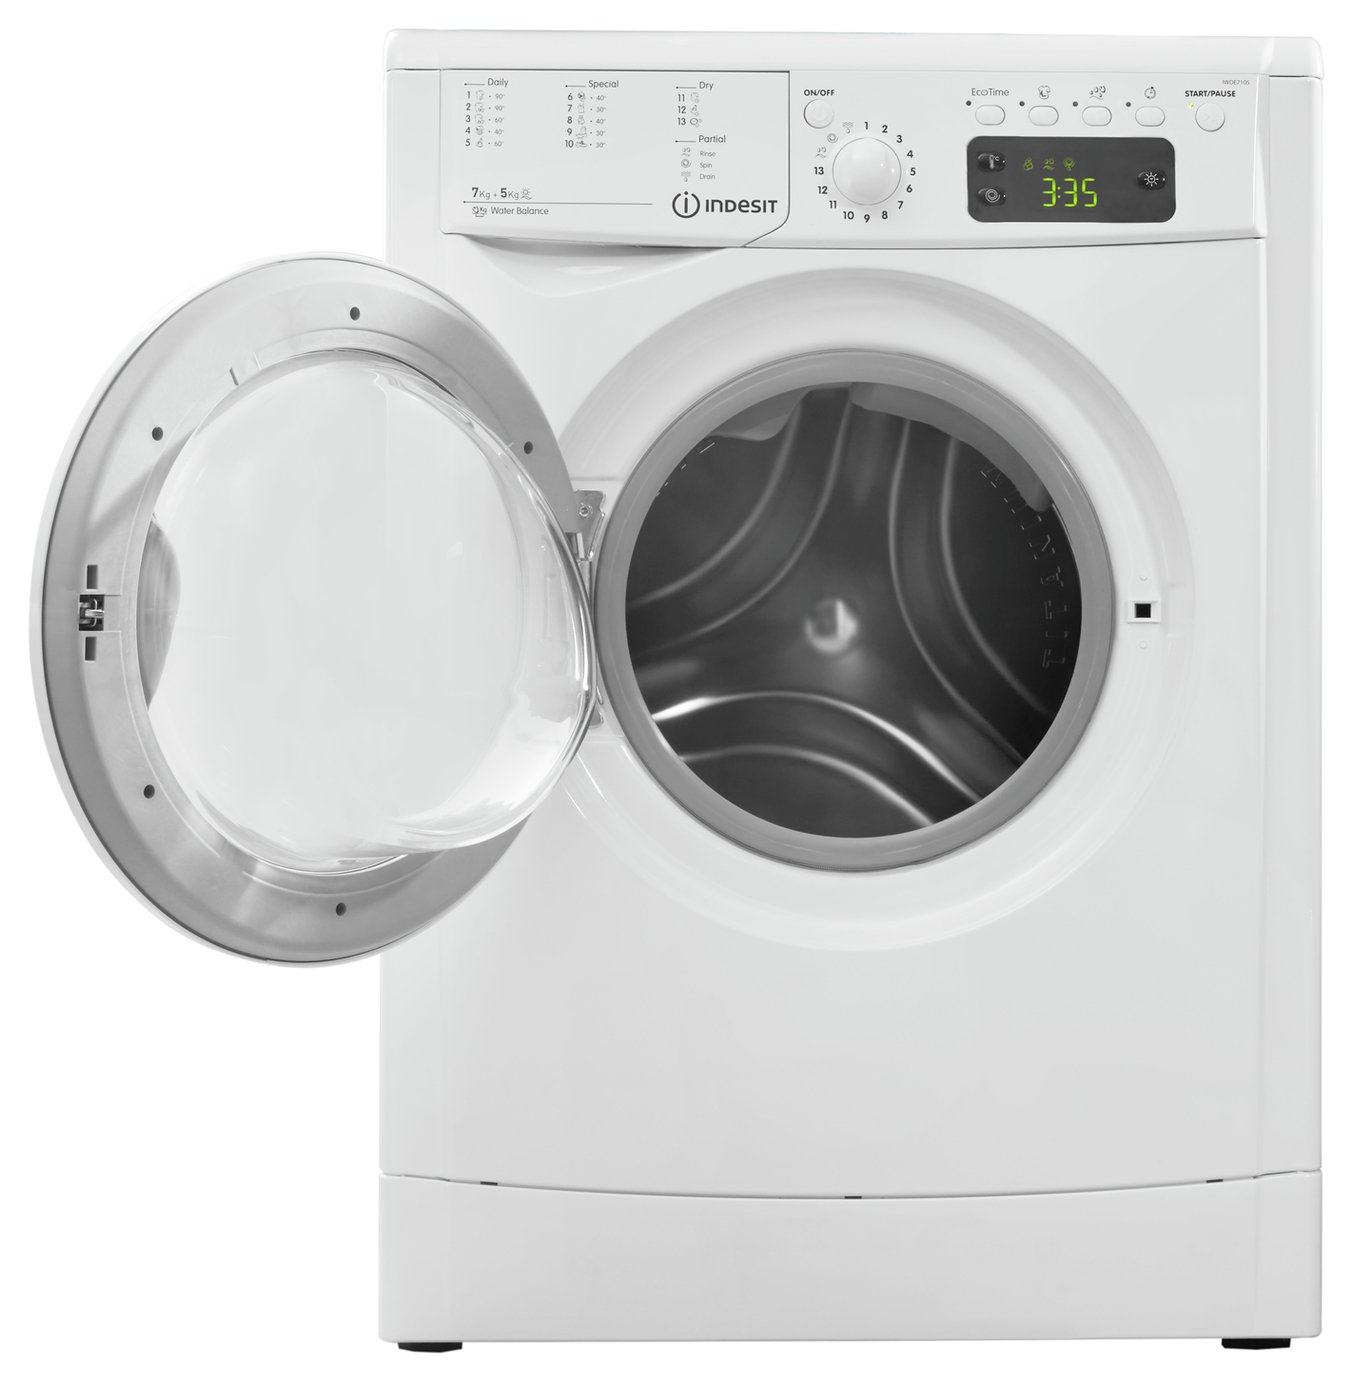 Indesit IWDD7143 7KG / 5KG 1400 Spin Washer Dryer Review